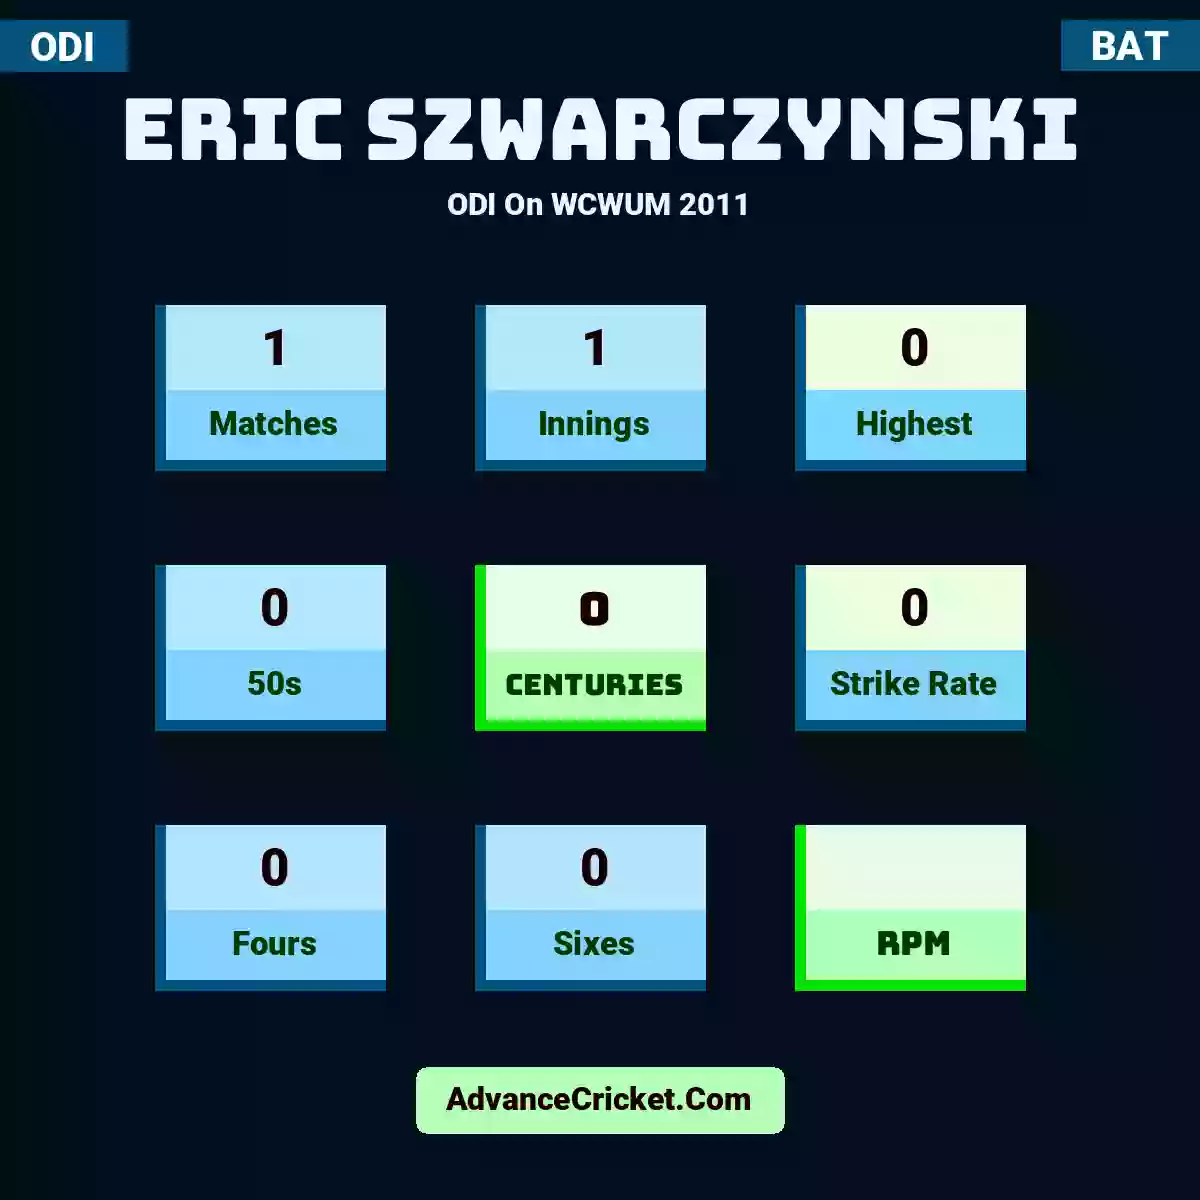 Eric Szwarczynski ODI  On WCWUM 2011, Eric Szwarczynski played 1 matches, scored 0 runs as highest, 0 half-centuries, and 0 centuries, with a strike rate of 0. E.Szwarczynski hit 0 fours and 0 sixes.